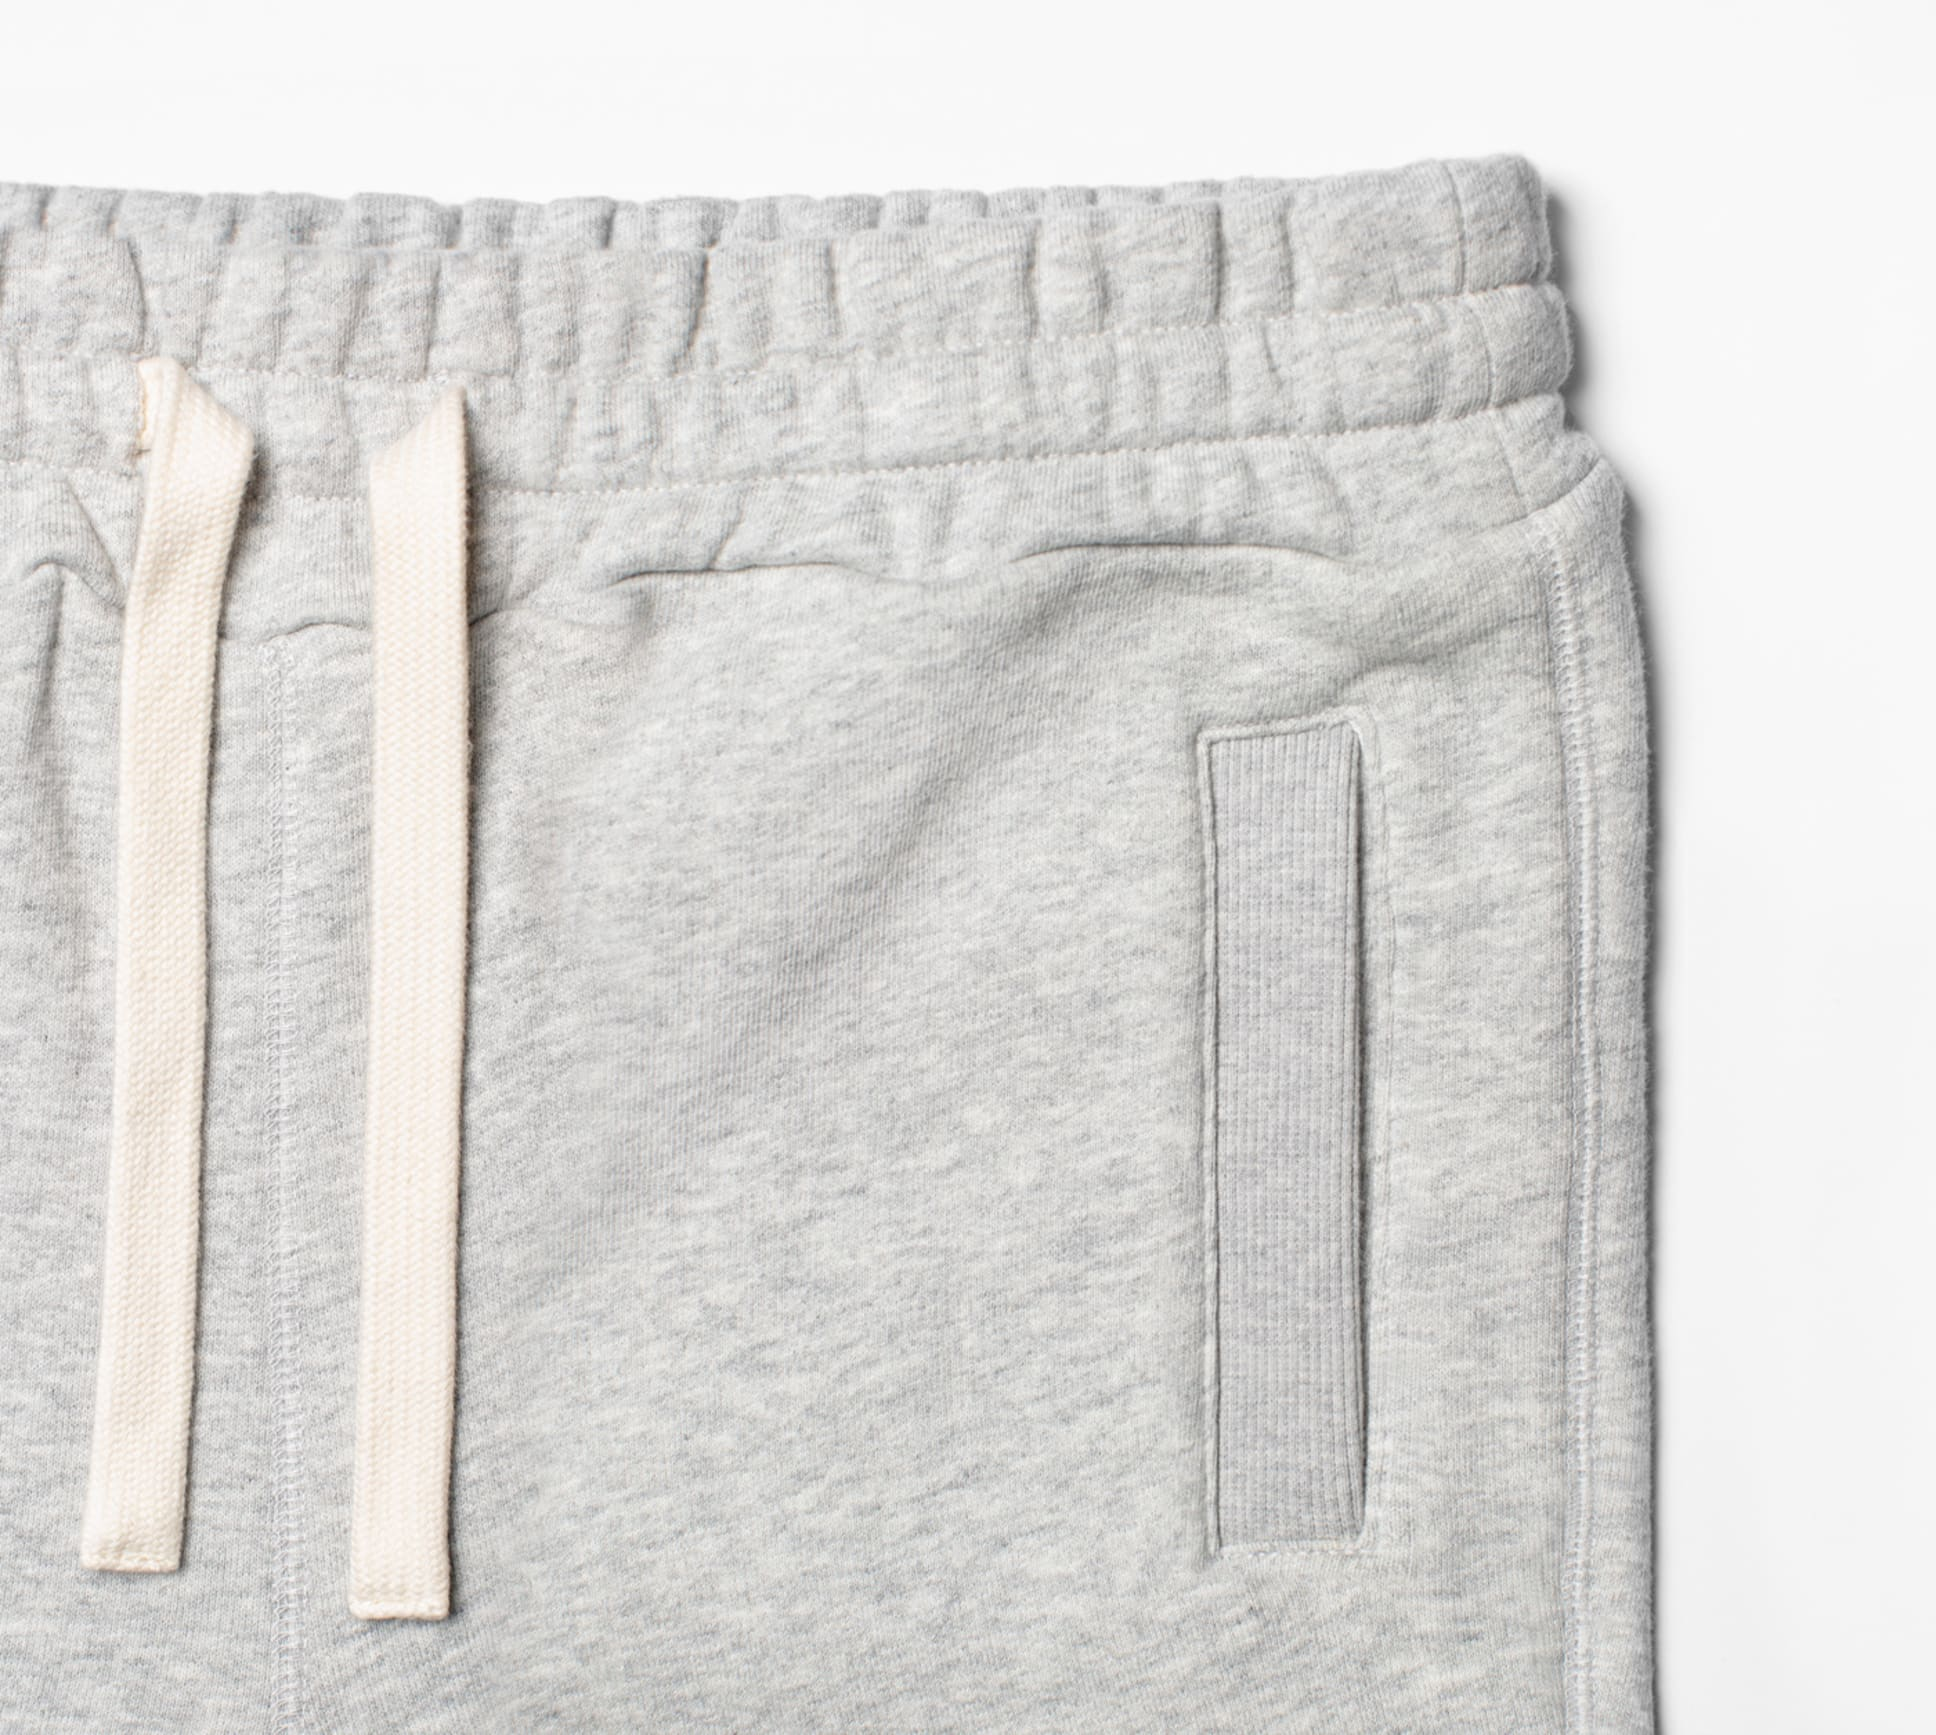 Lounge & Leisure Sweatpants (M's Grey) - Pocket Detail 